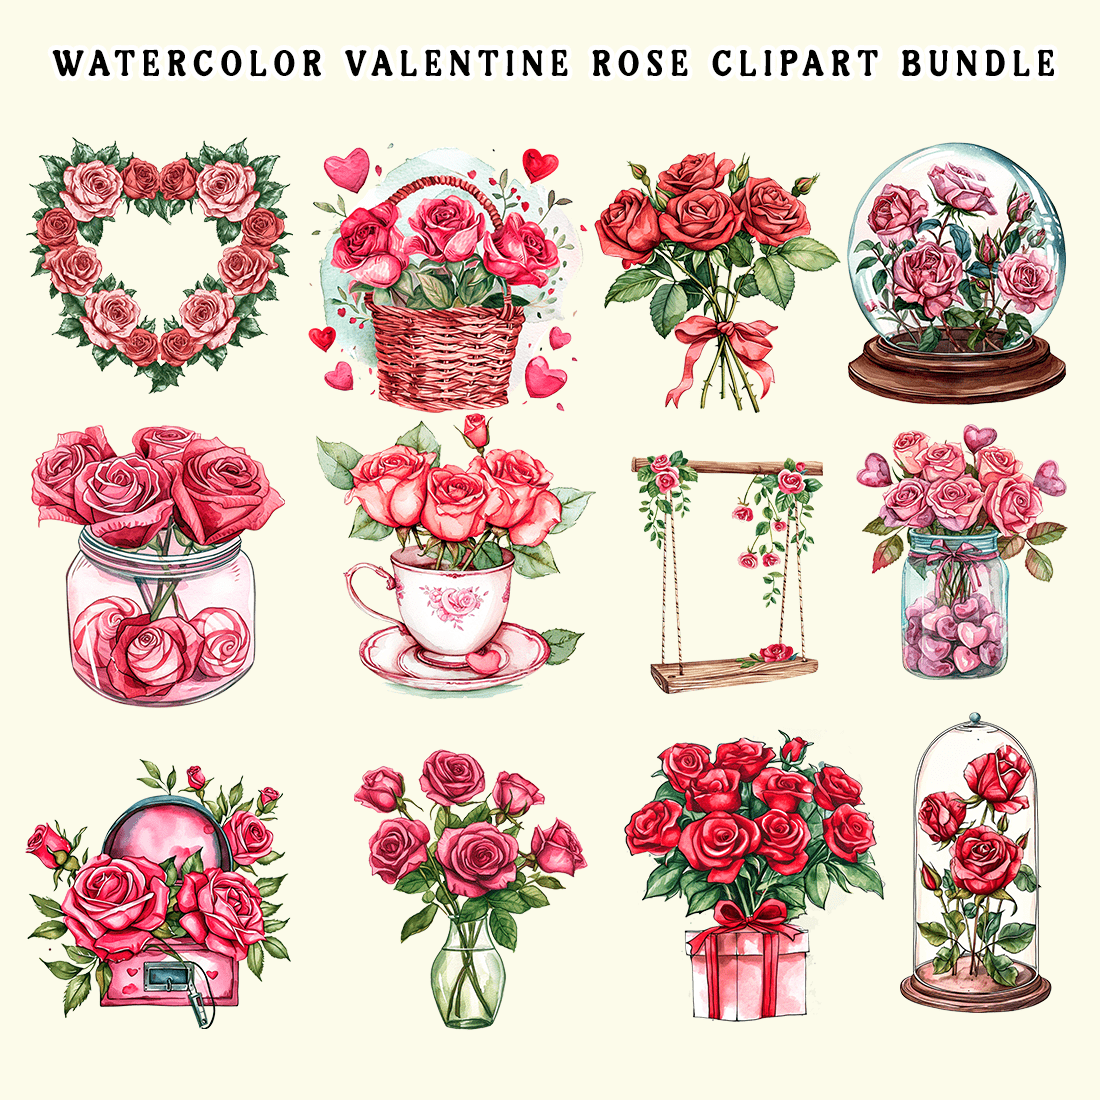 Watercolor Valentine Rose Clipart Bundle preview image.